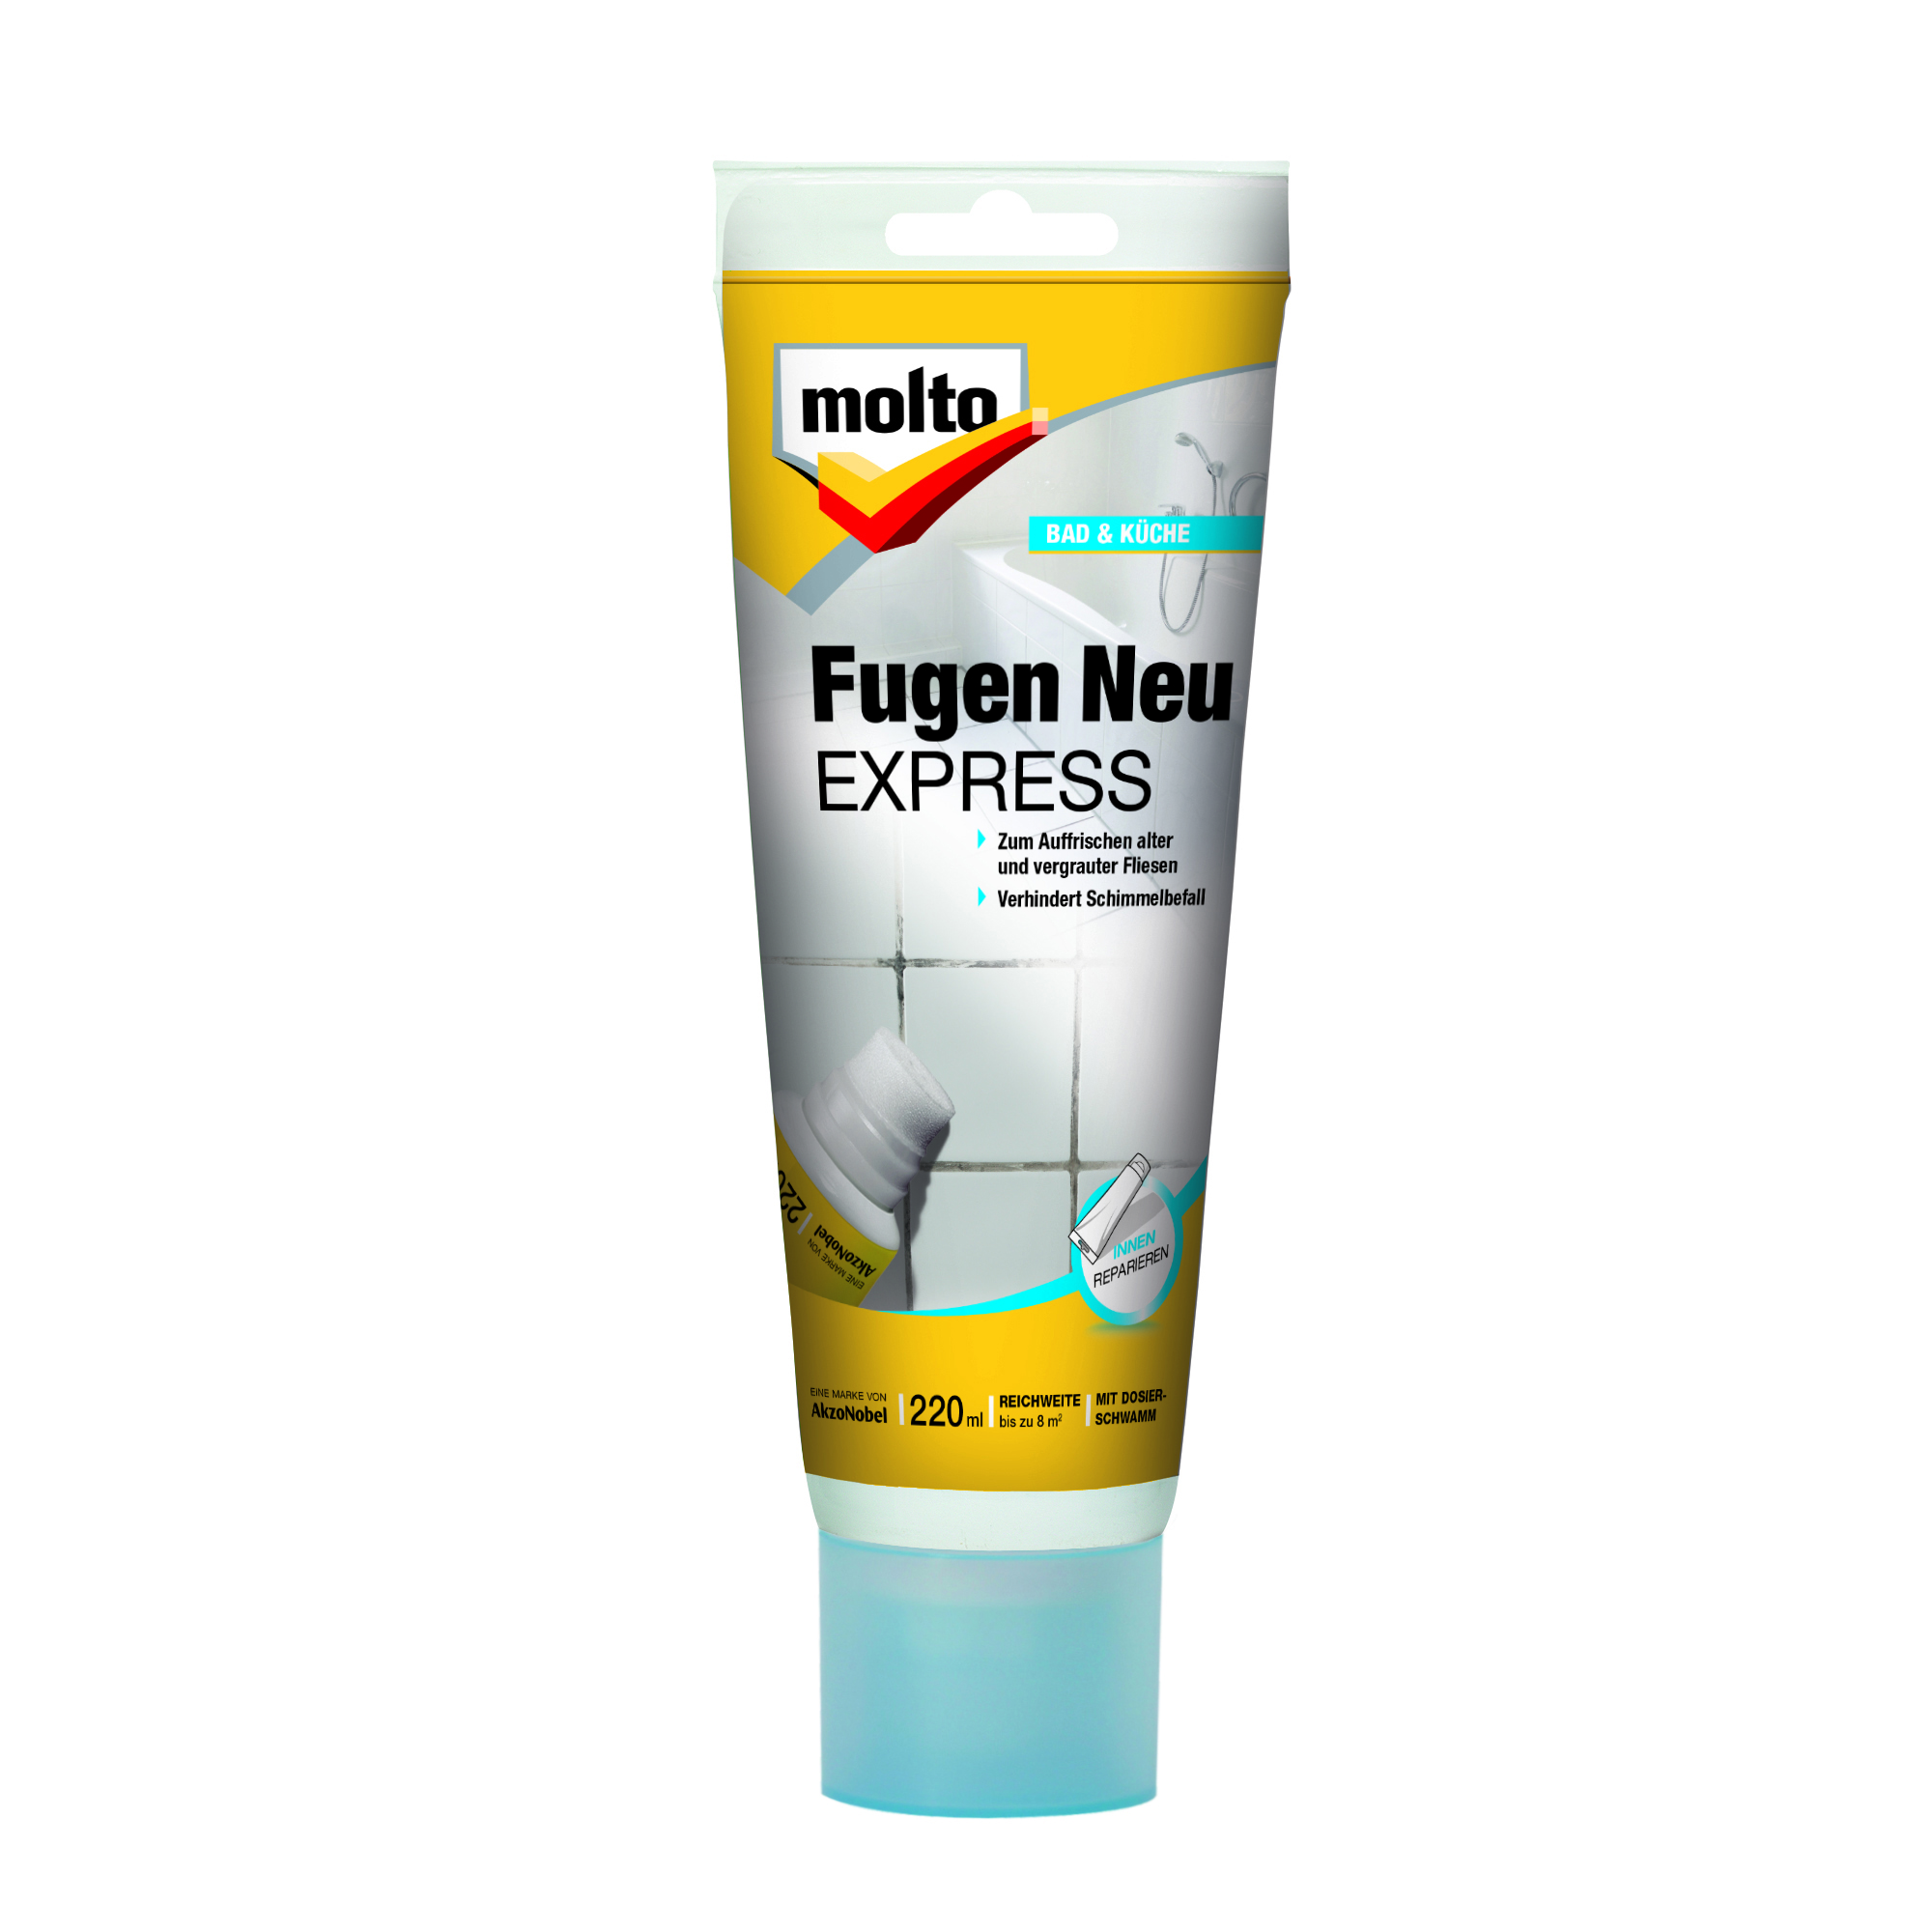 Fugen-Neu "Express" 220 ml + product picture